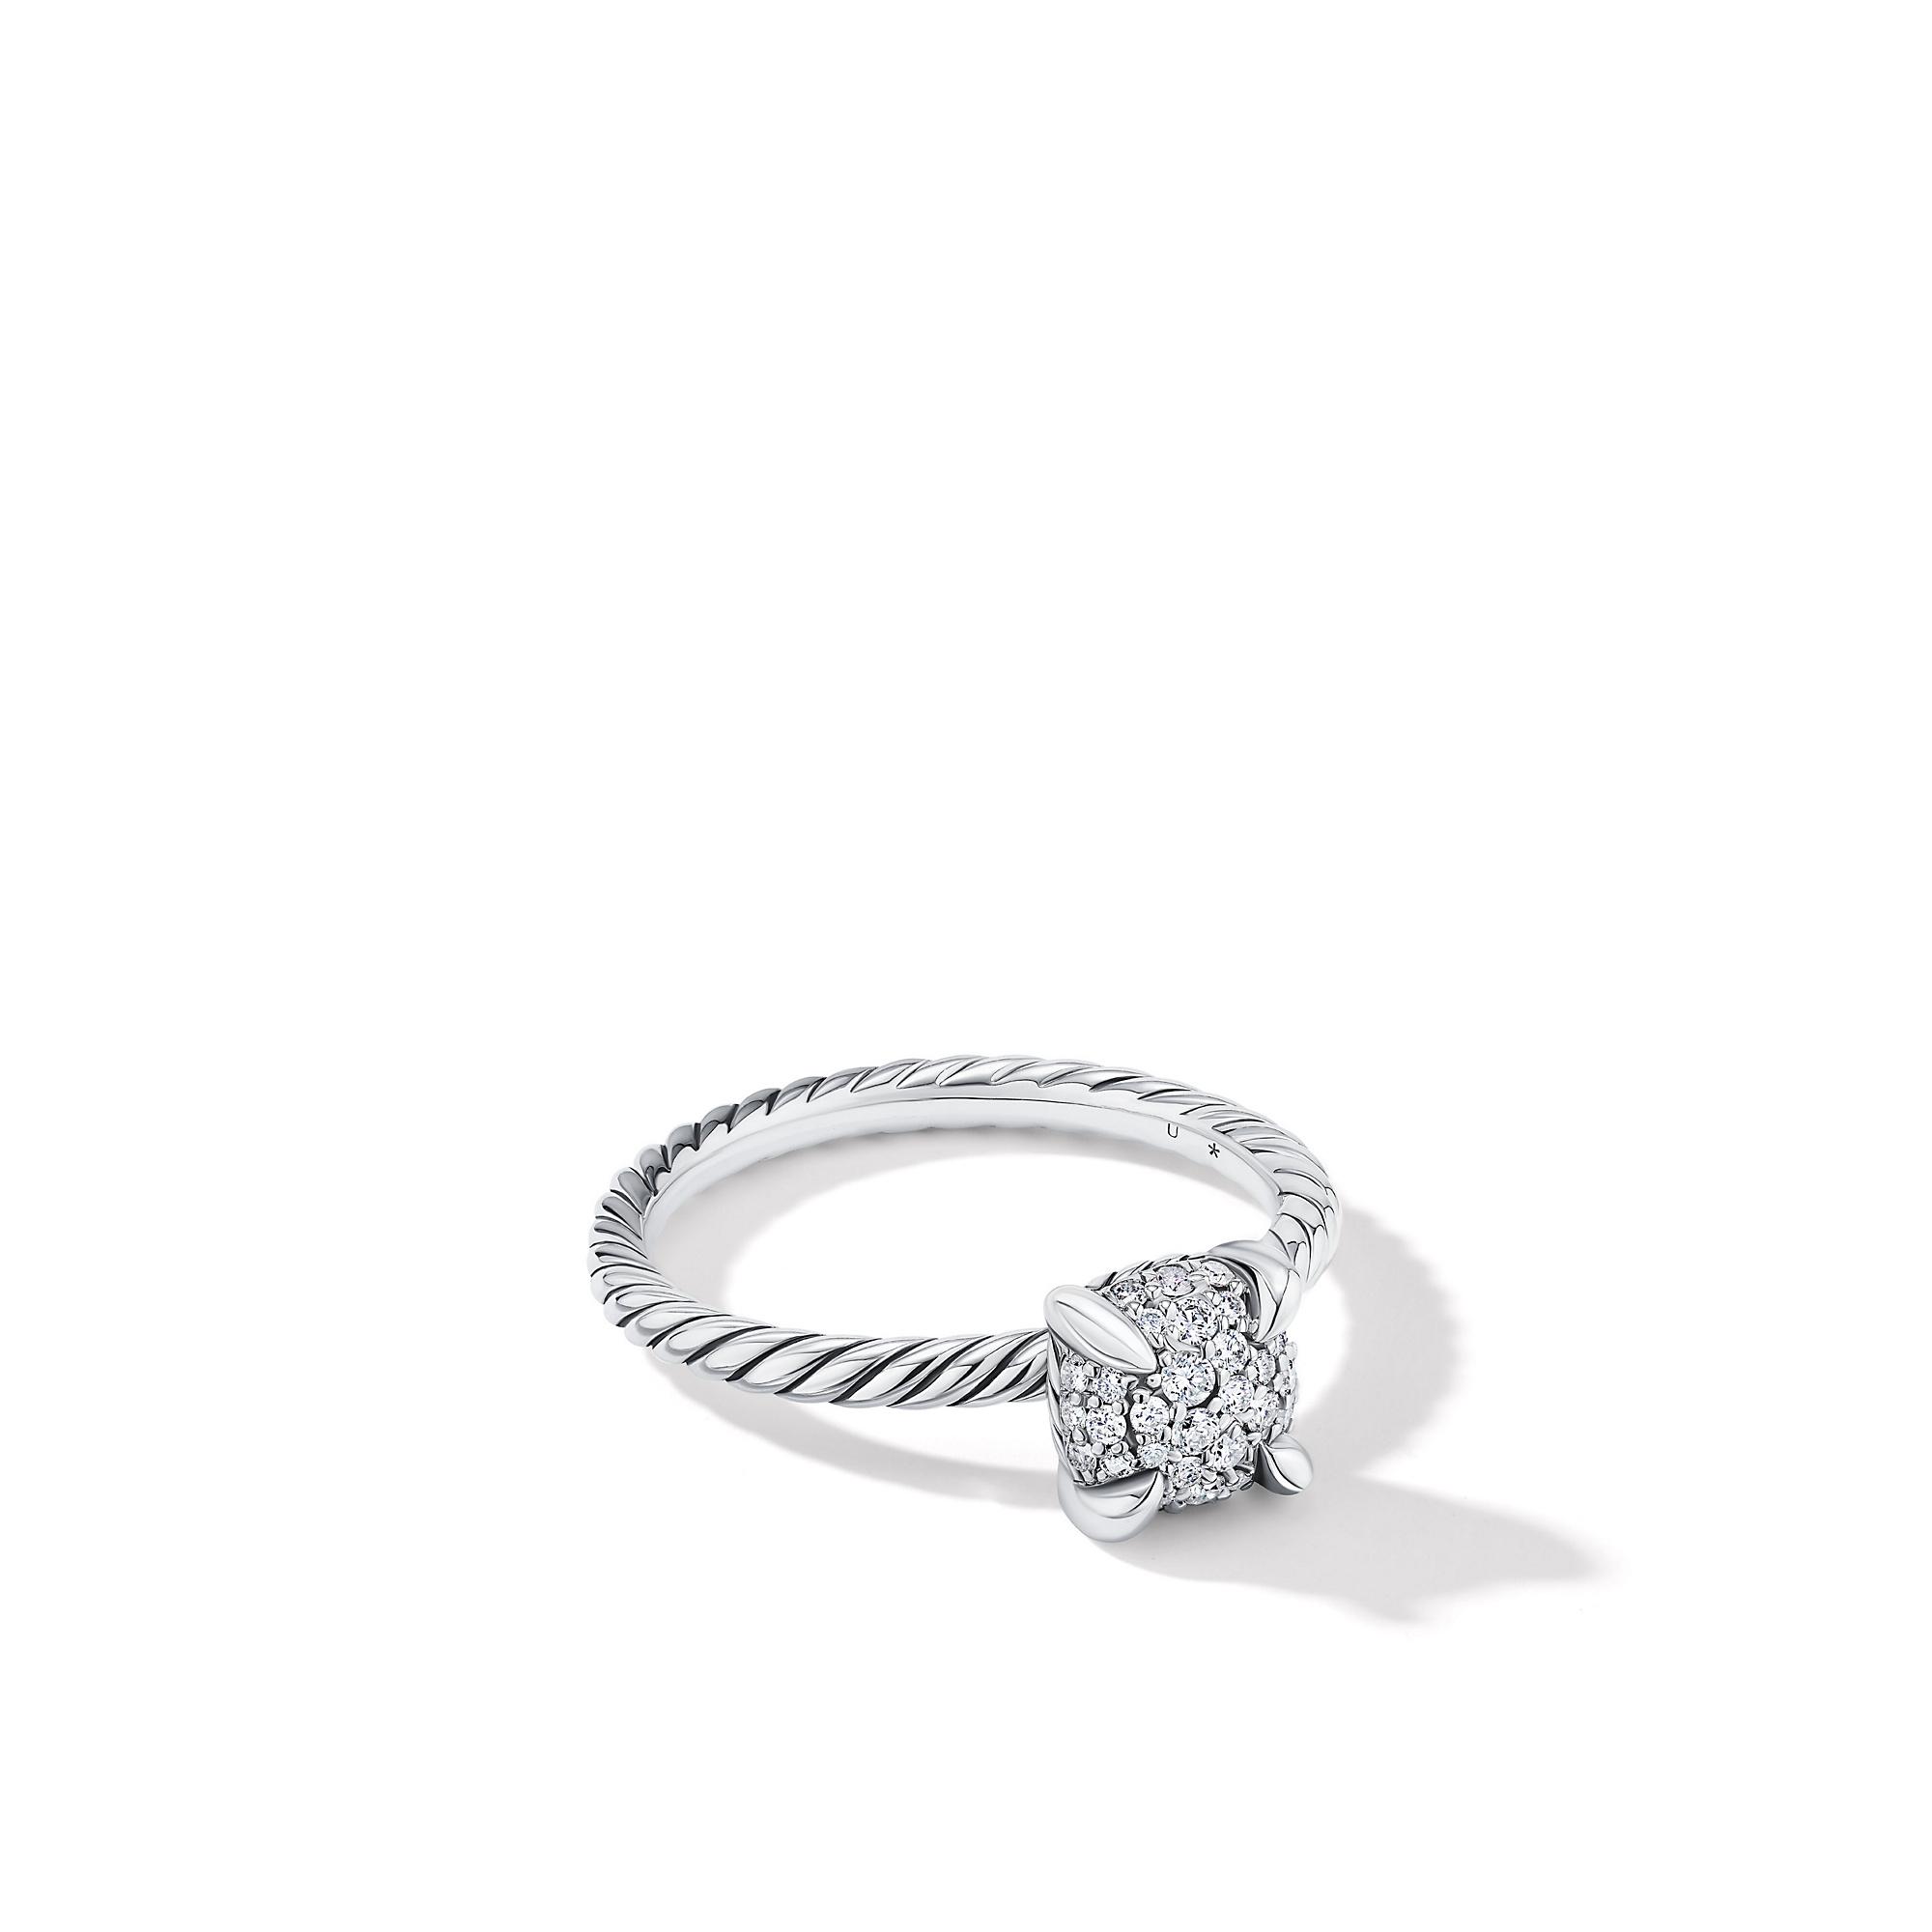 David Yurman Petite Chatelaine Ring with Full Pave Diamonds, size 6.5